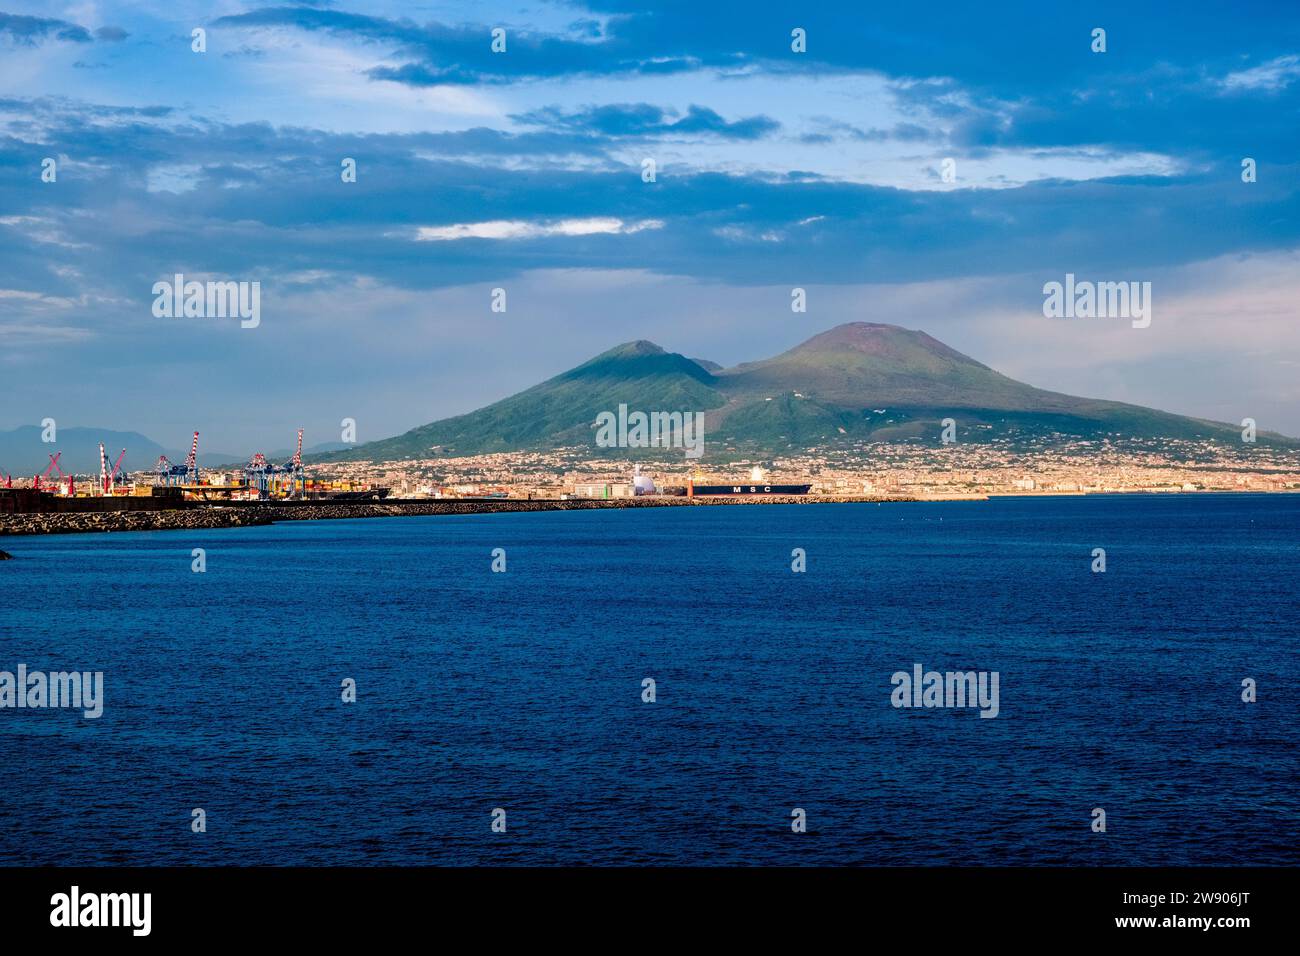 The volcano Mount Vesuvius, seen over the Gulf of Naples. Stock Photo